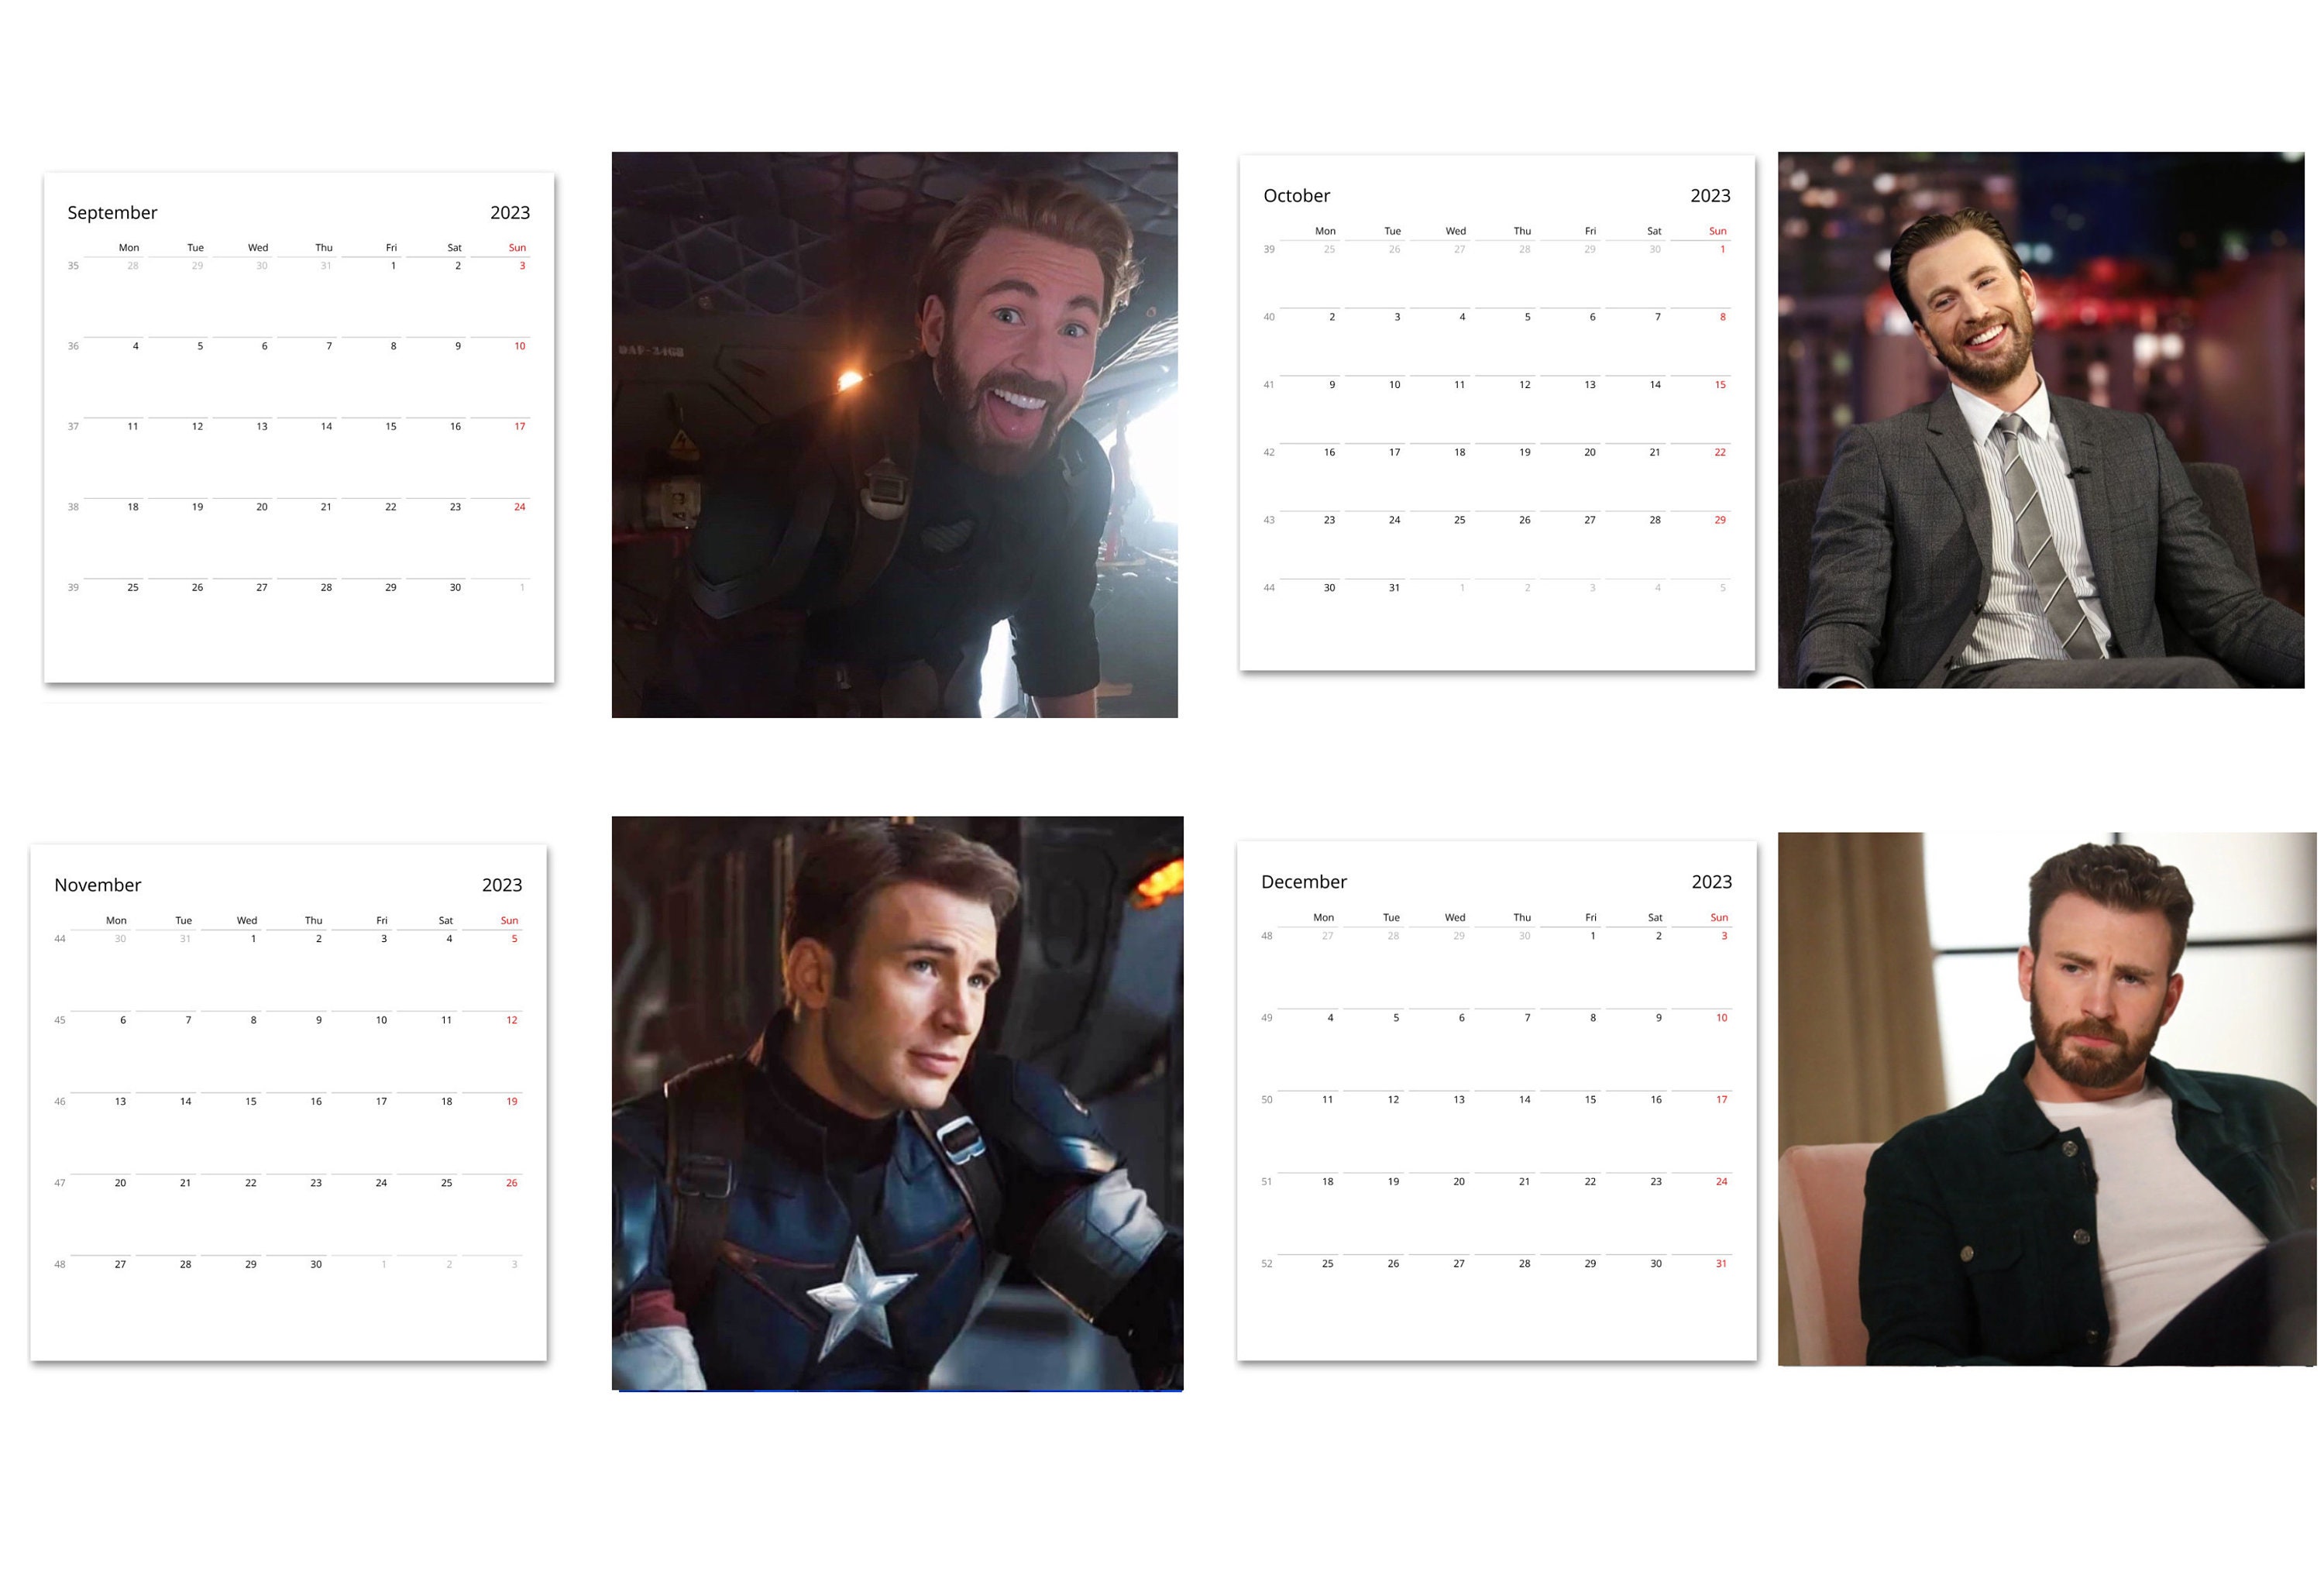 2023 Chris Evans Calendar Celebrity Calendar 2023 Wall Etsy Ireland